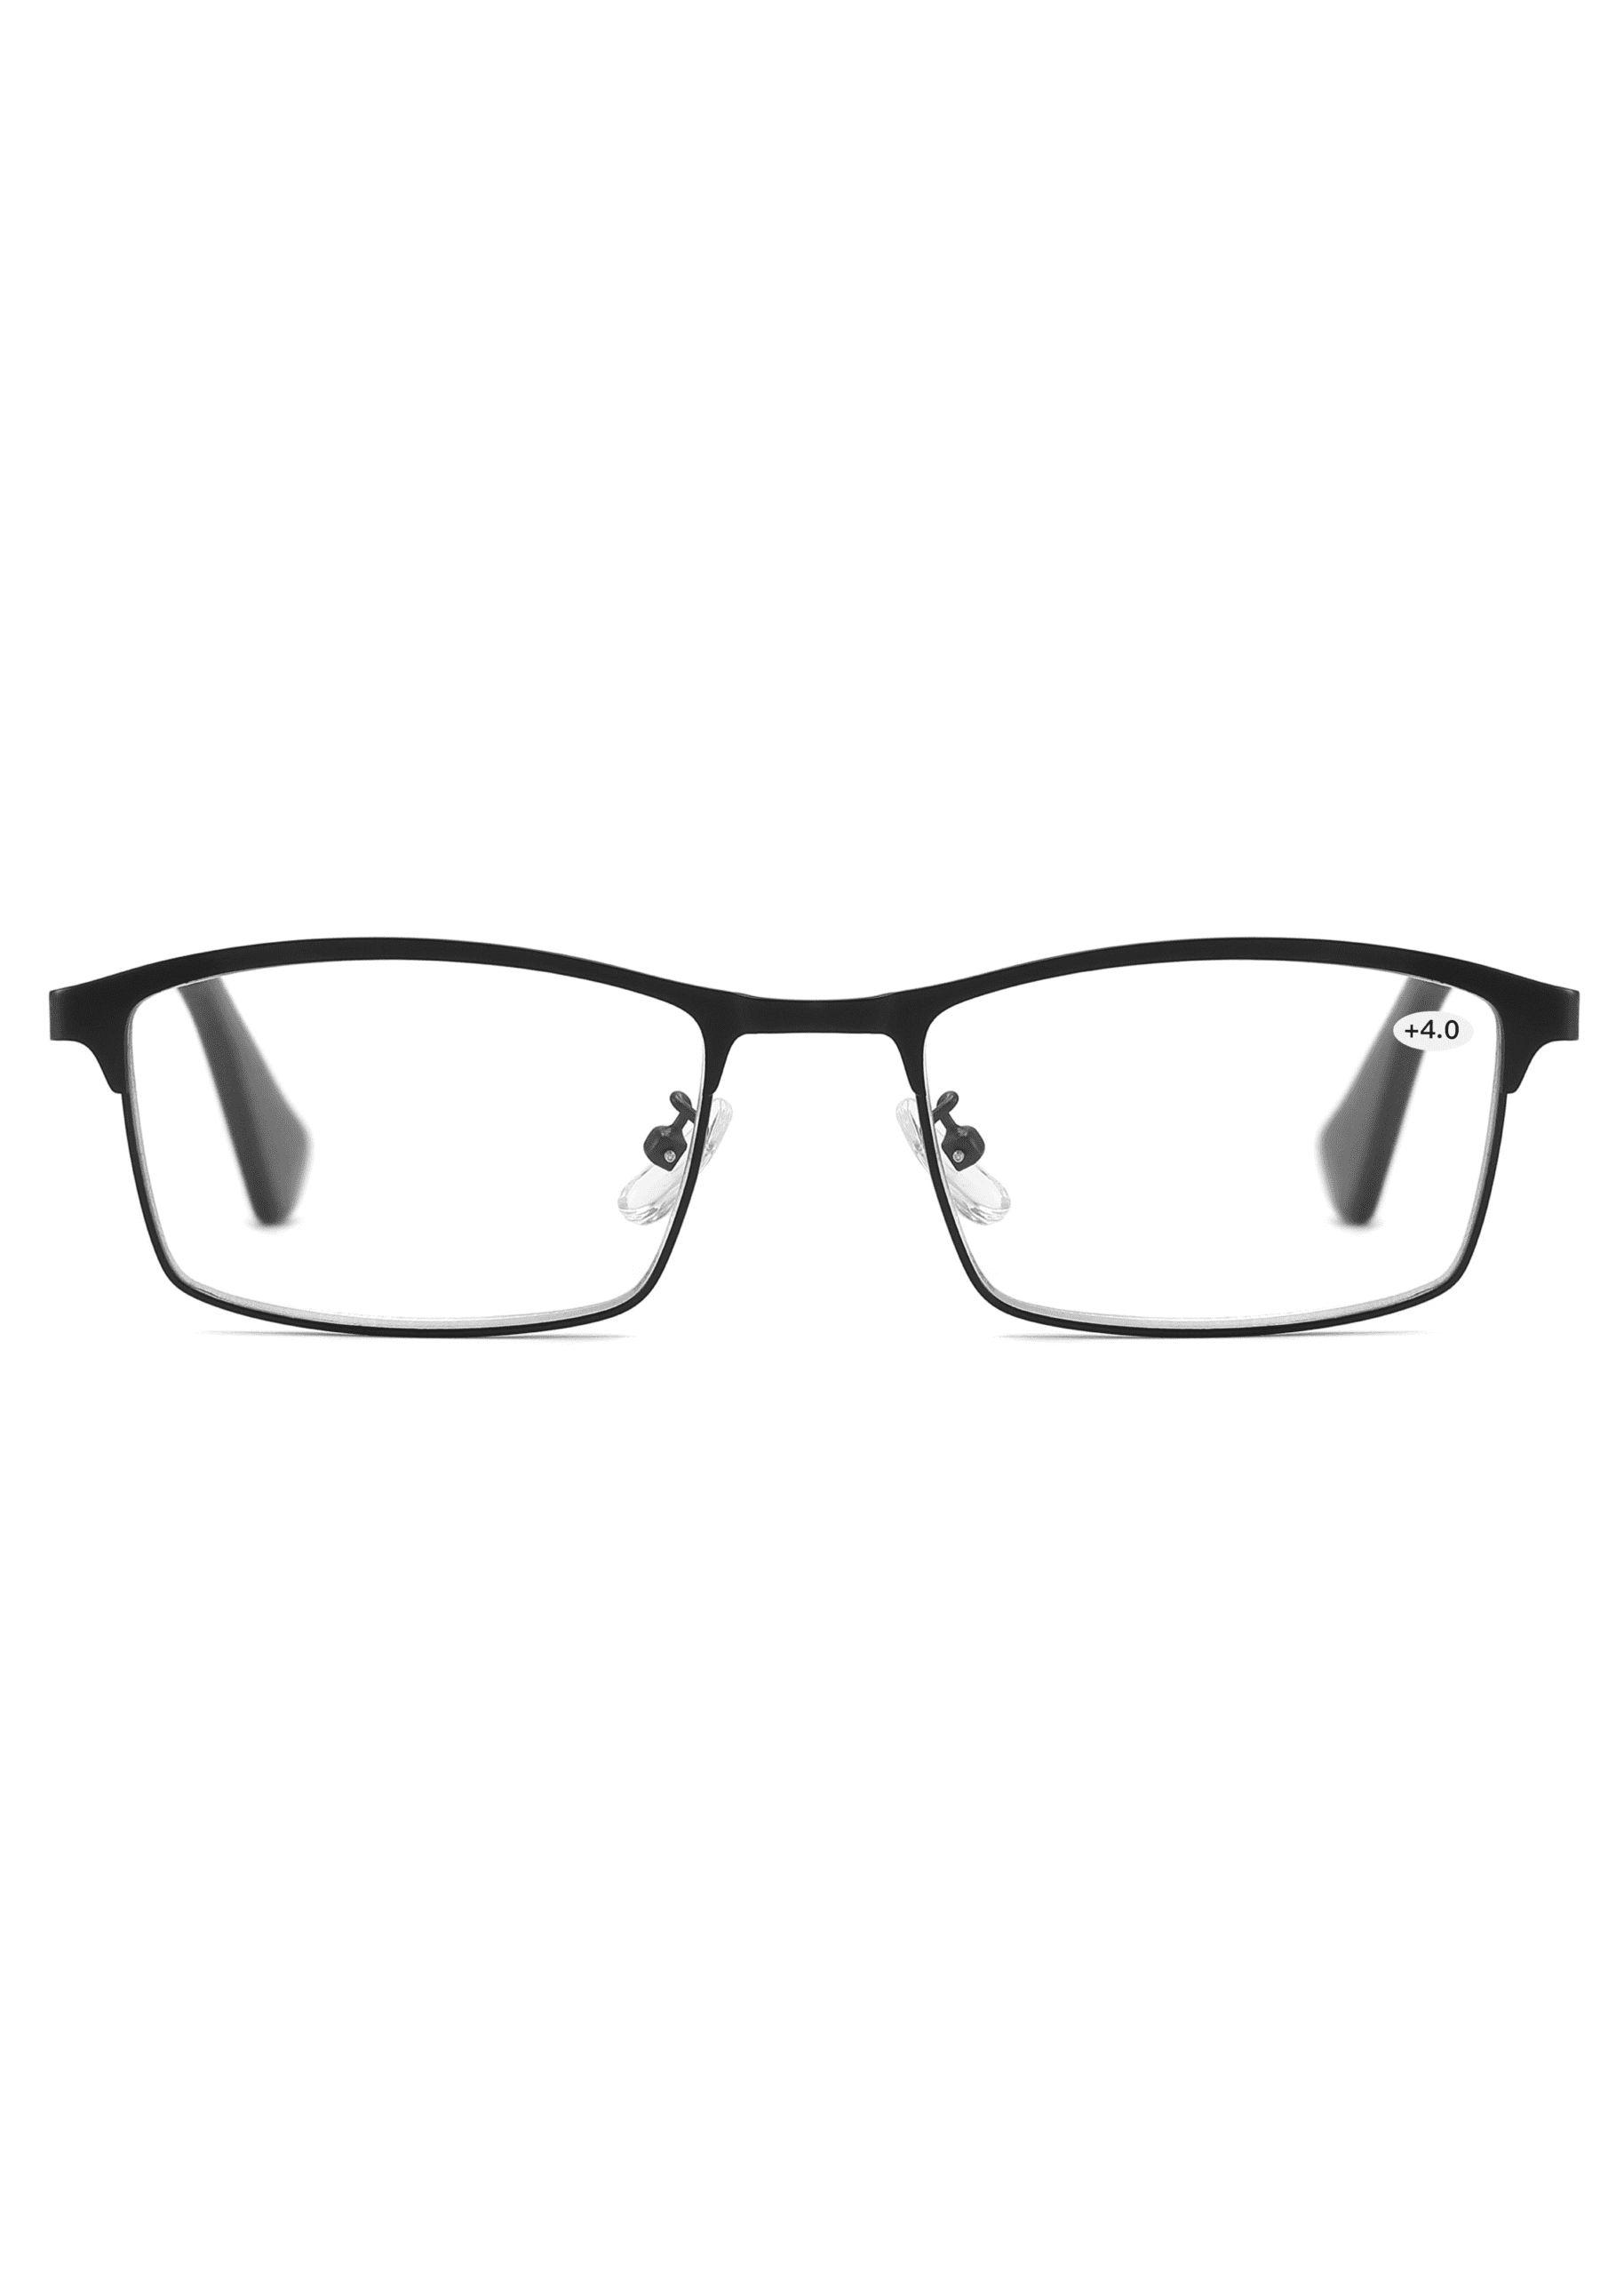 Bulk Wholesale Steel Sheet Full Frame Glasses RG8111 for Men Front Product Display, China reading glasses manufacturer and wholesaler and supplier, Eyewear Purchasing, steel sheet glasses